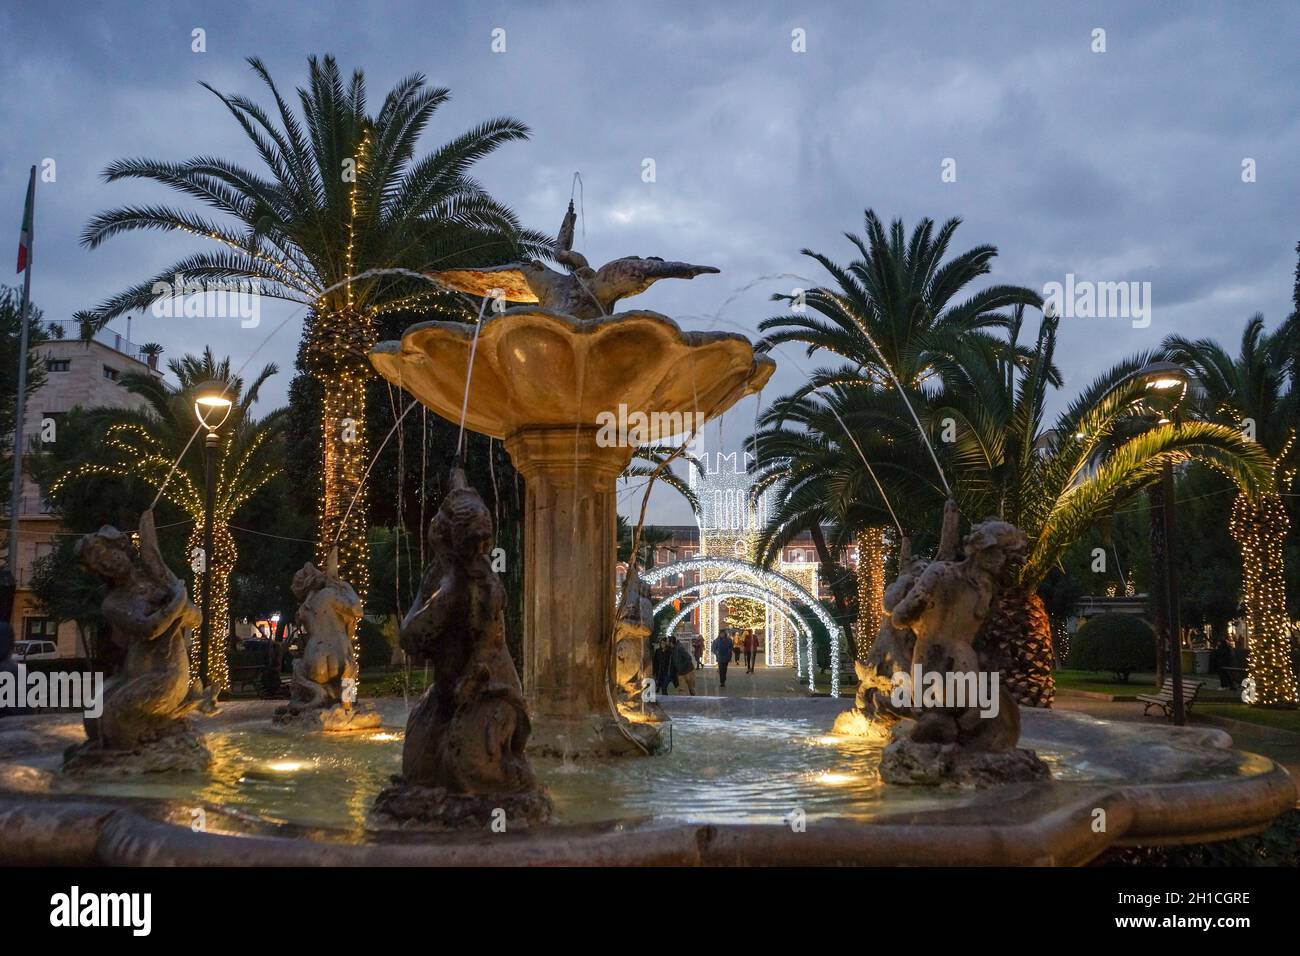 Fountain, Public Gardens, Christmas illuminations, People, Civitanova Marche, Marche, Italy, Europe Stock Photo